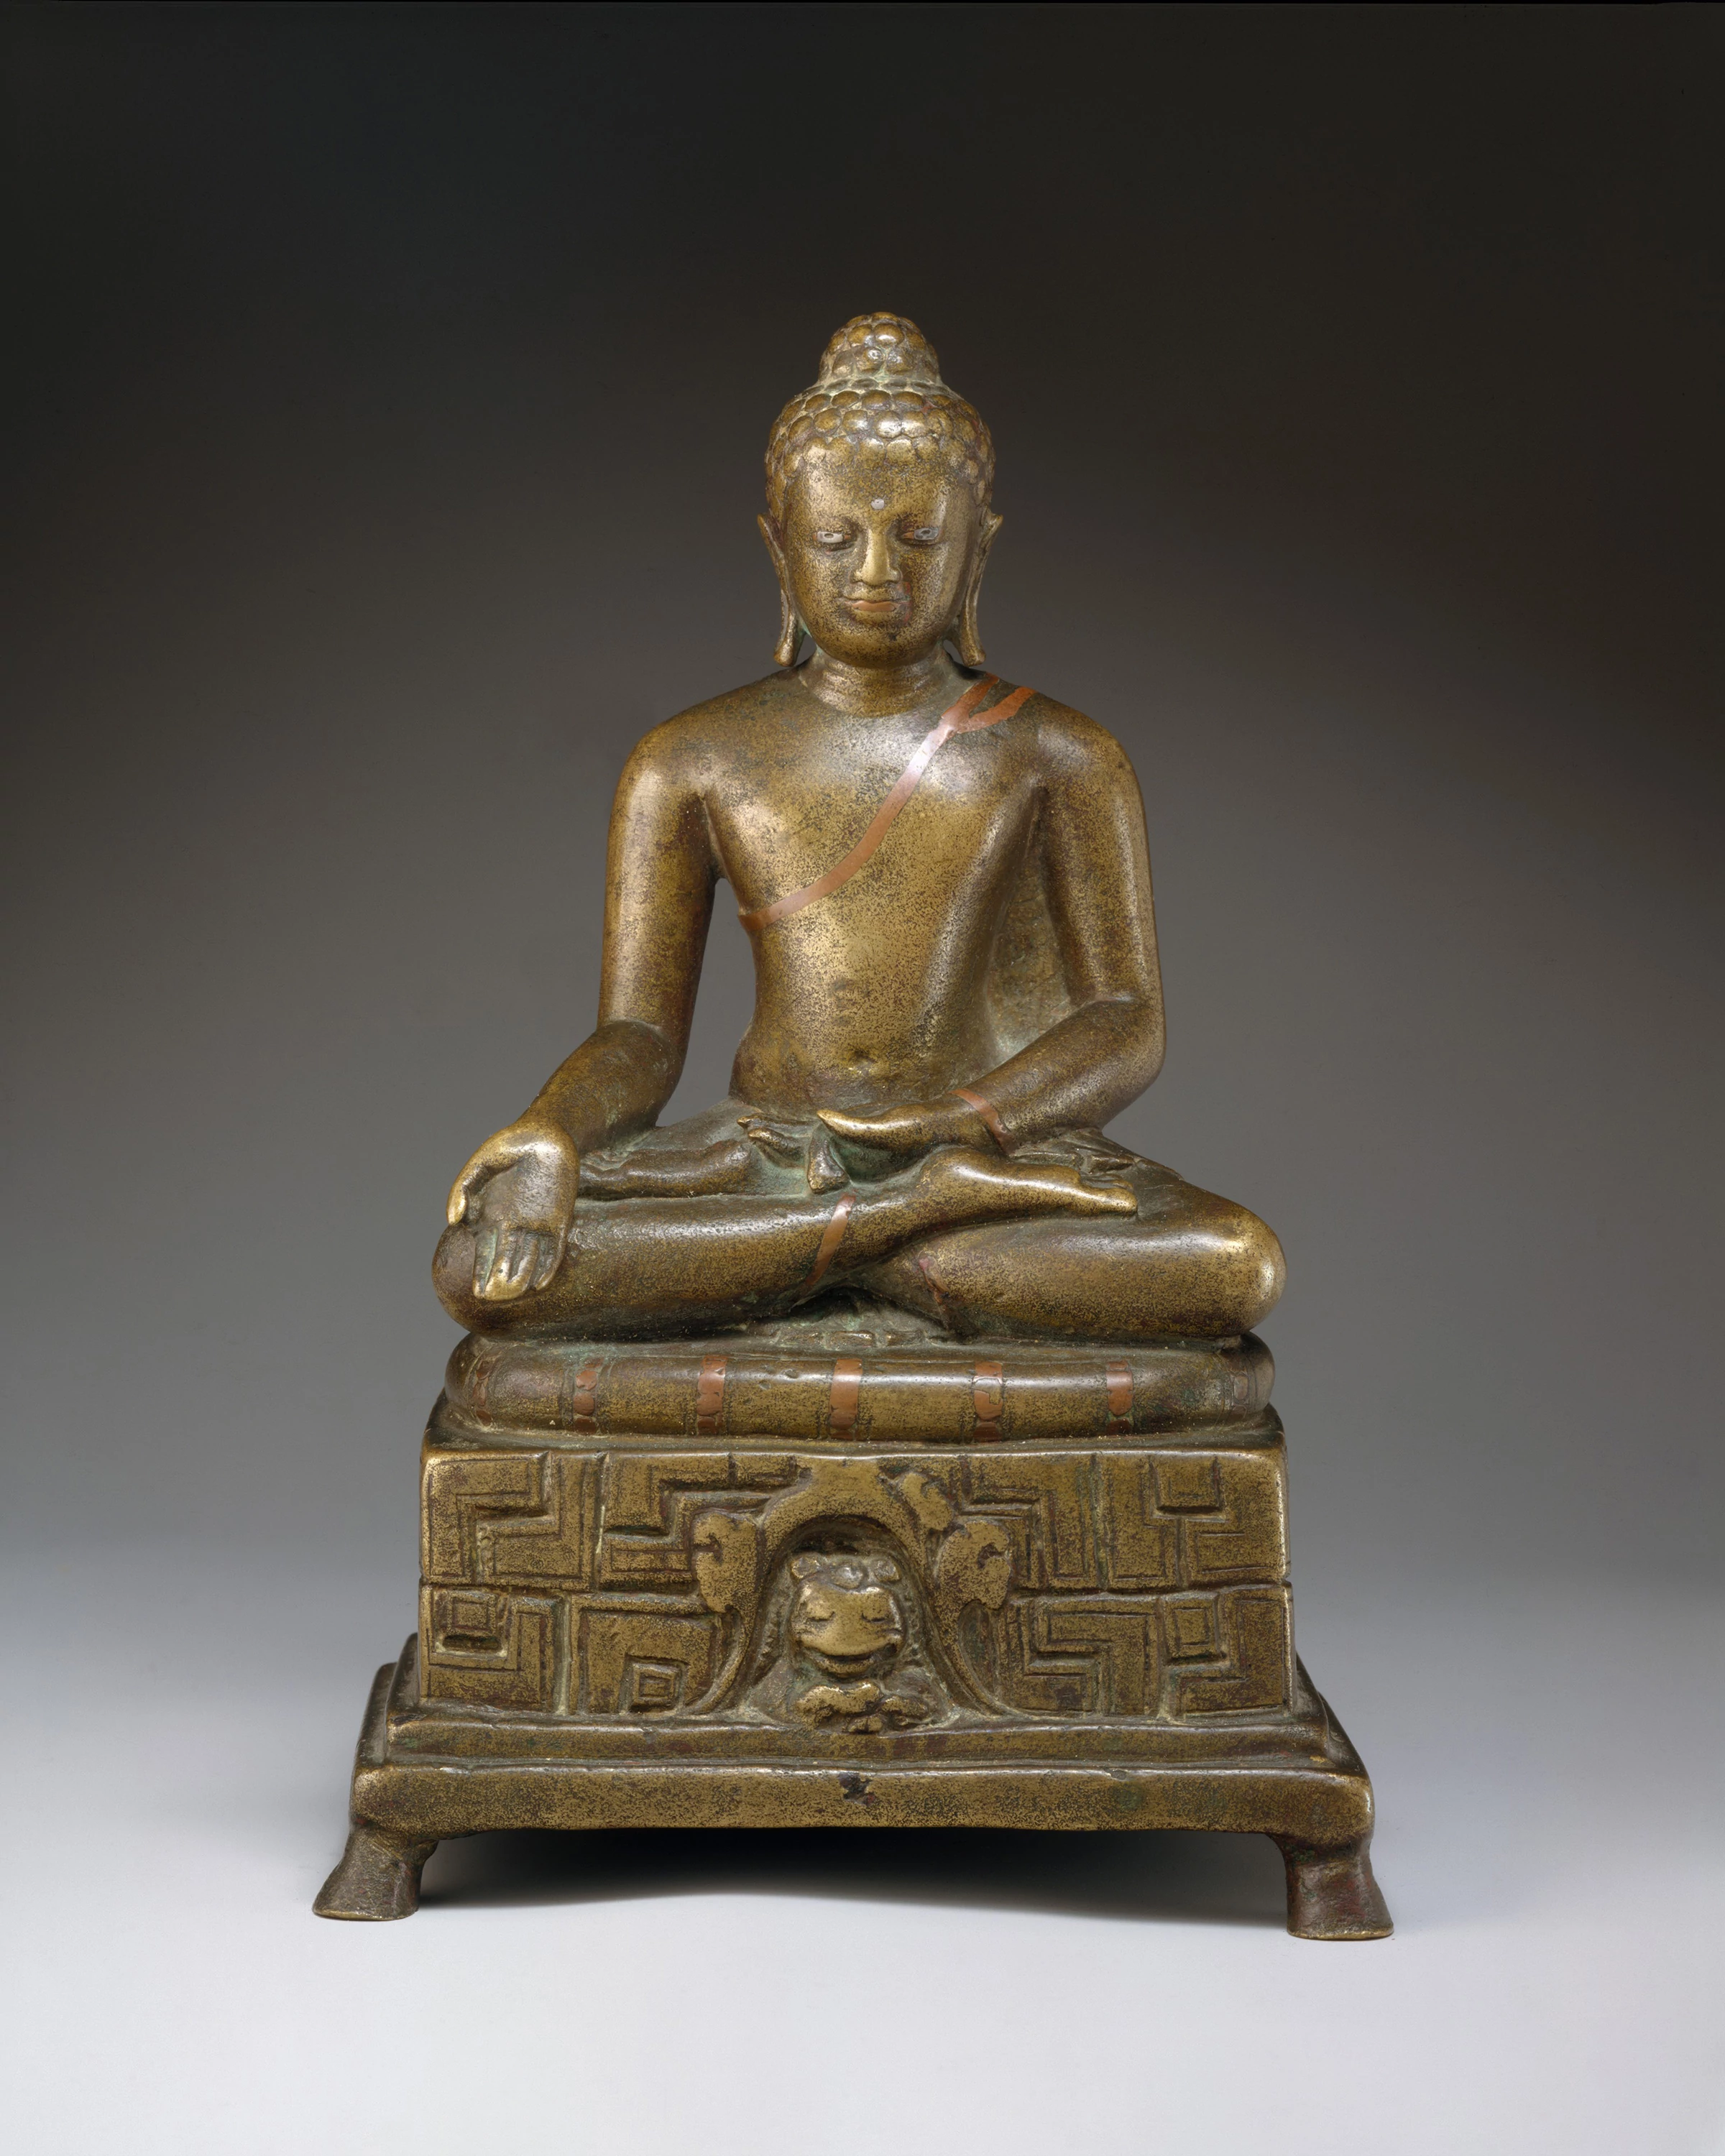 Seated Buddha, Classical India